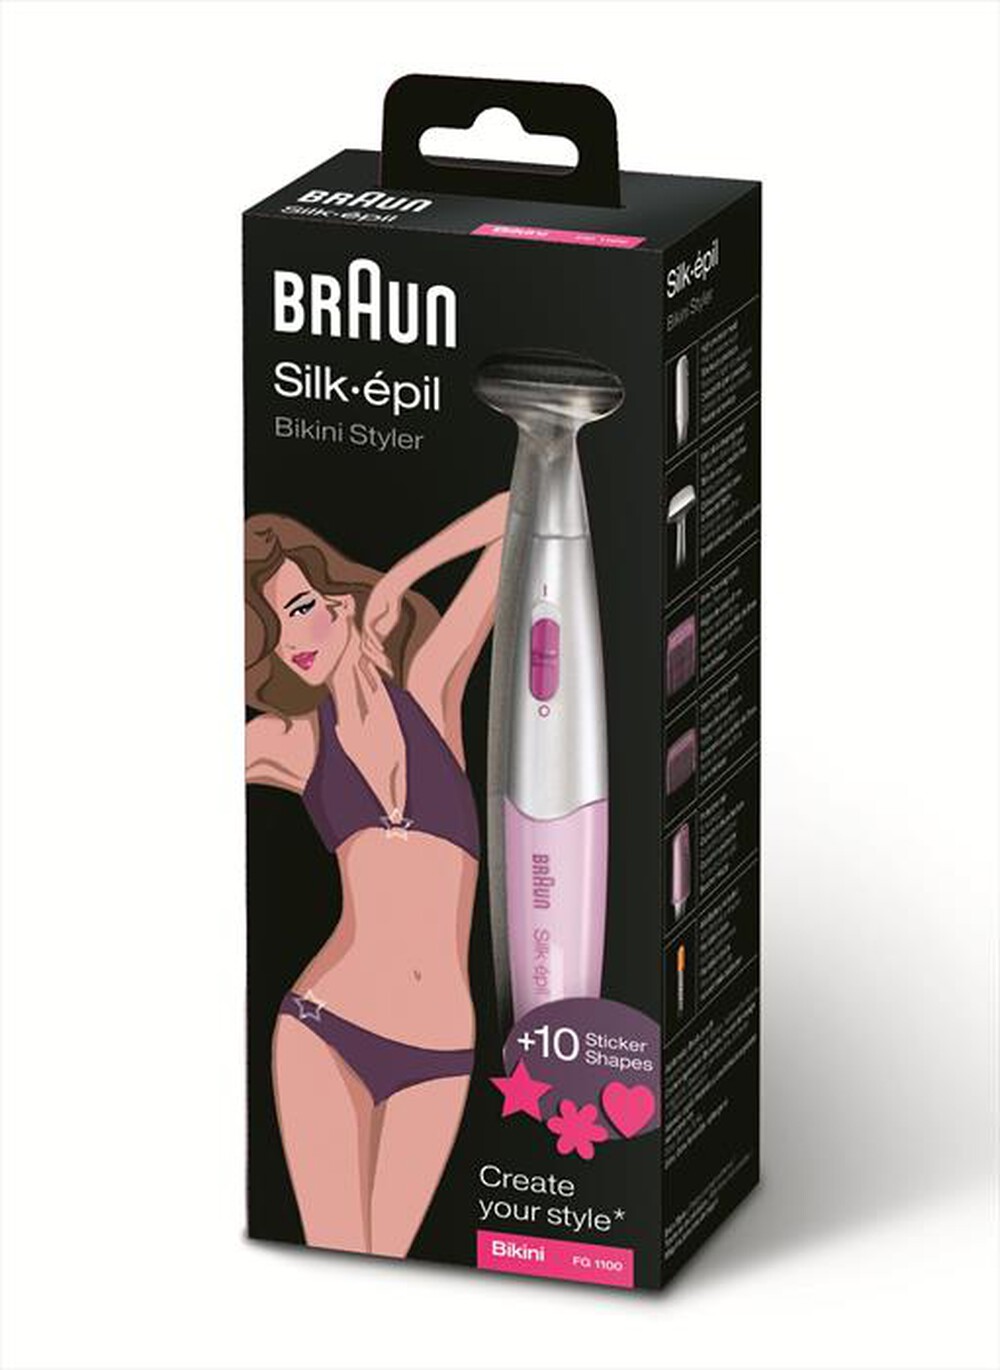 "BRAUN - Silk-épil Bikini Styler FG1100 - Rosa"